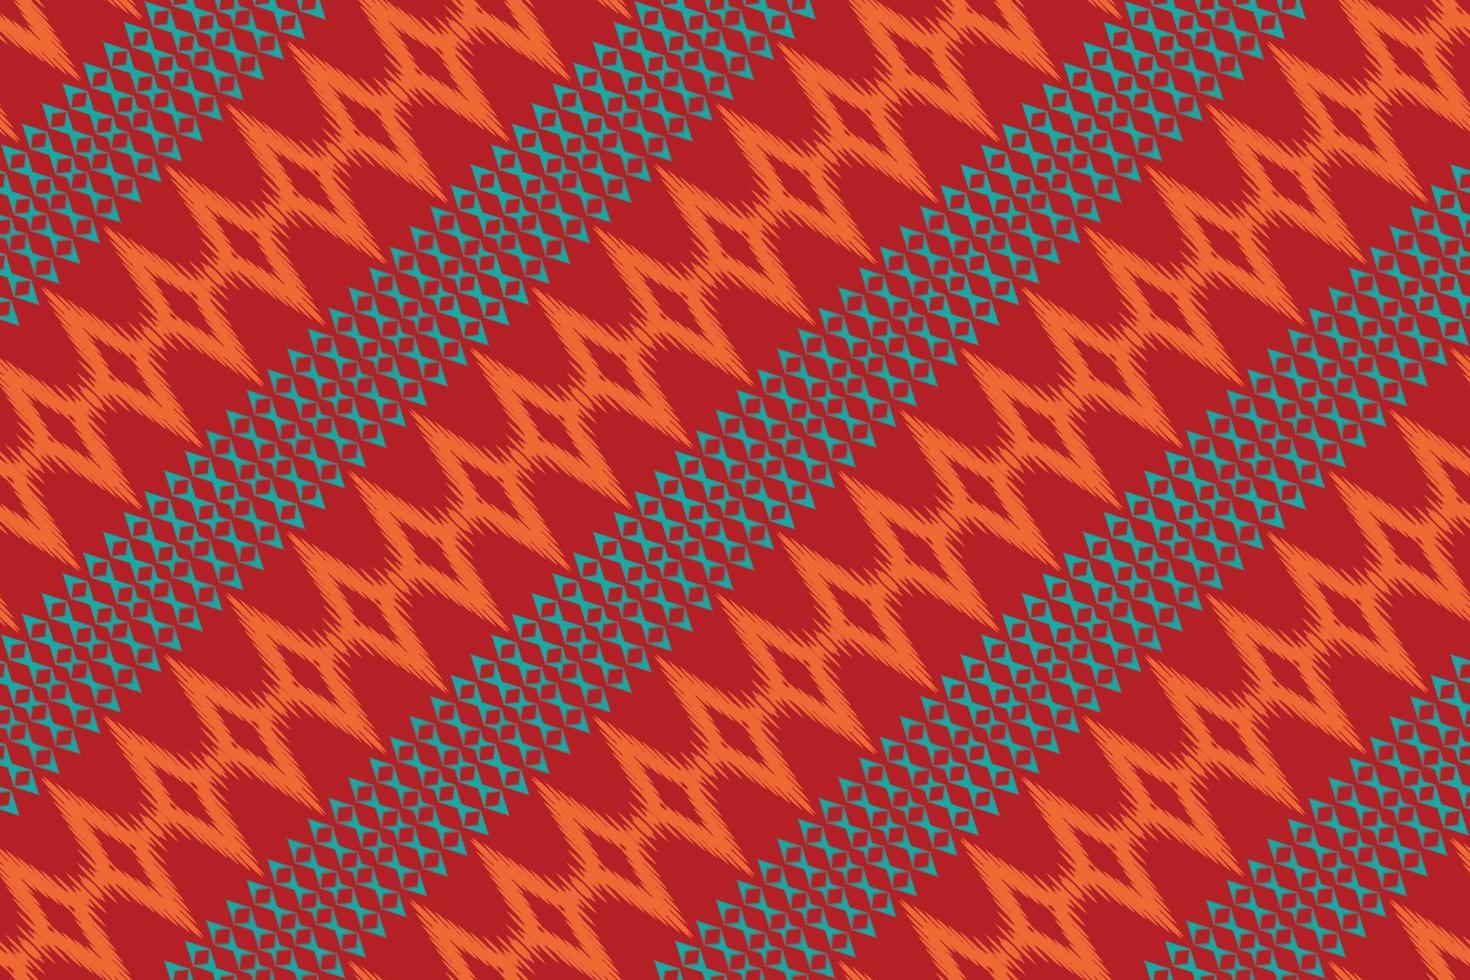 ikat puntos patrón abstracto sin fisuras tribal. étnico geométrico batik ikkat vector digital diseño textil para estampados tela sari mughal cepillo símbolo franjas textura kurti kurtis kurtas